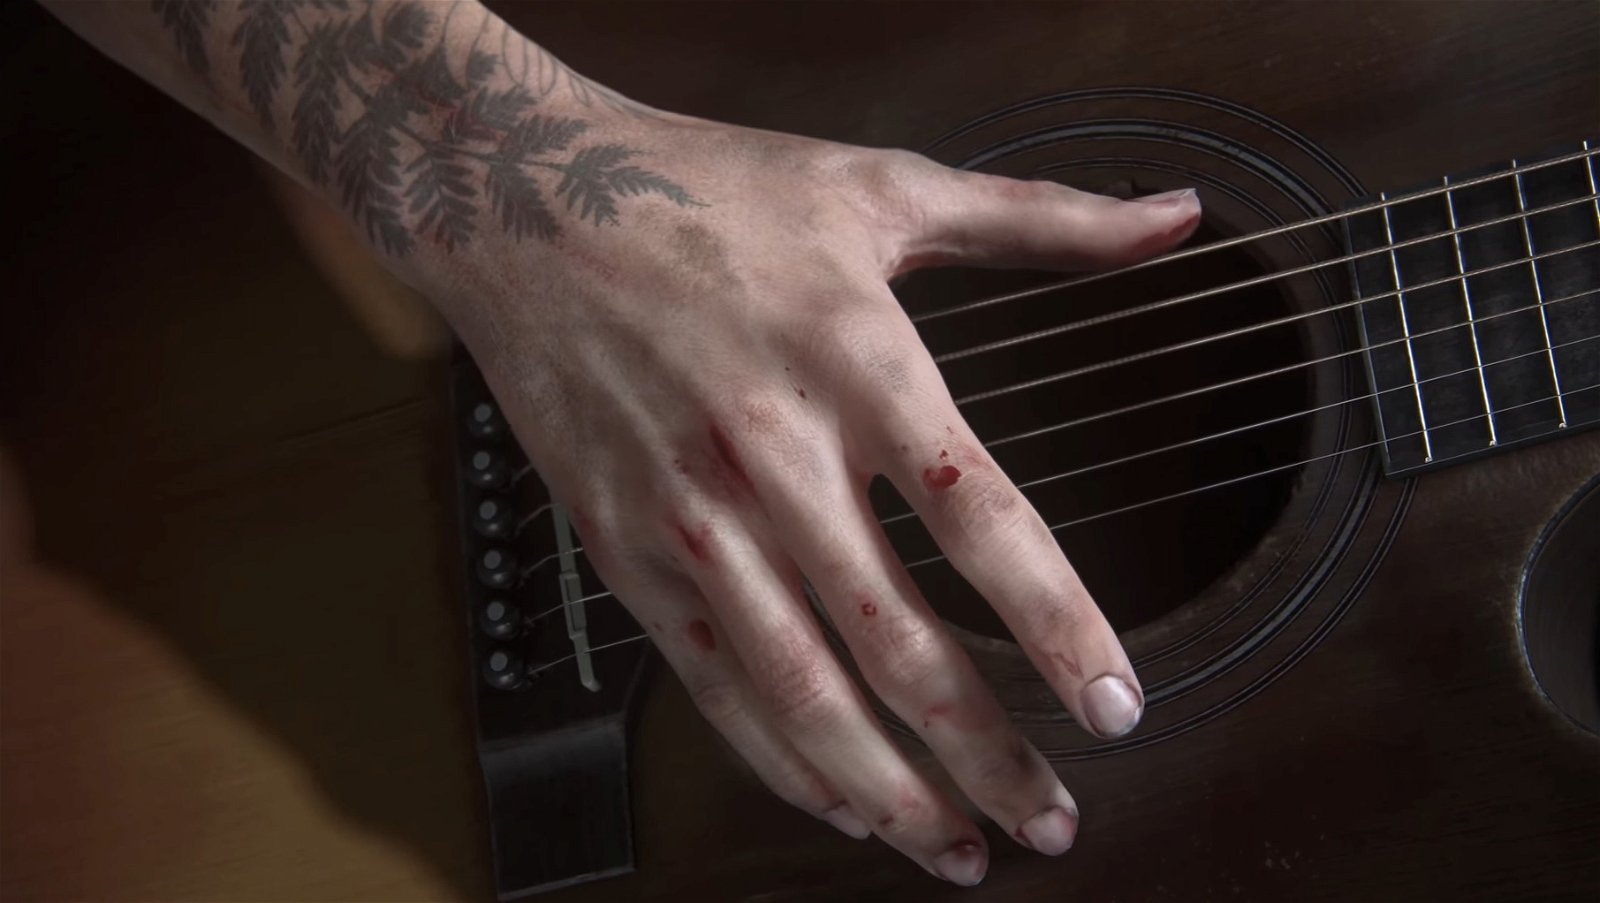 The Last of Us 2 muestra el tatuaje de Ellie al detalle